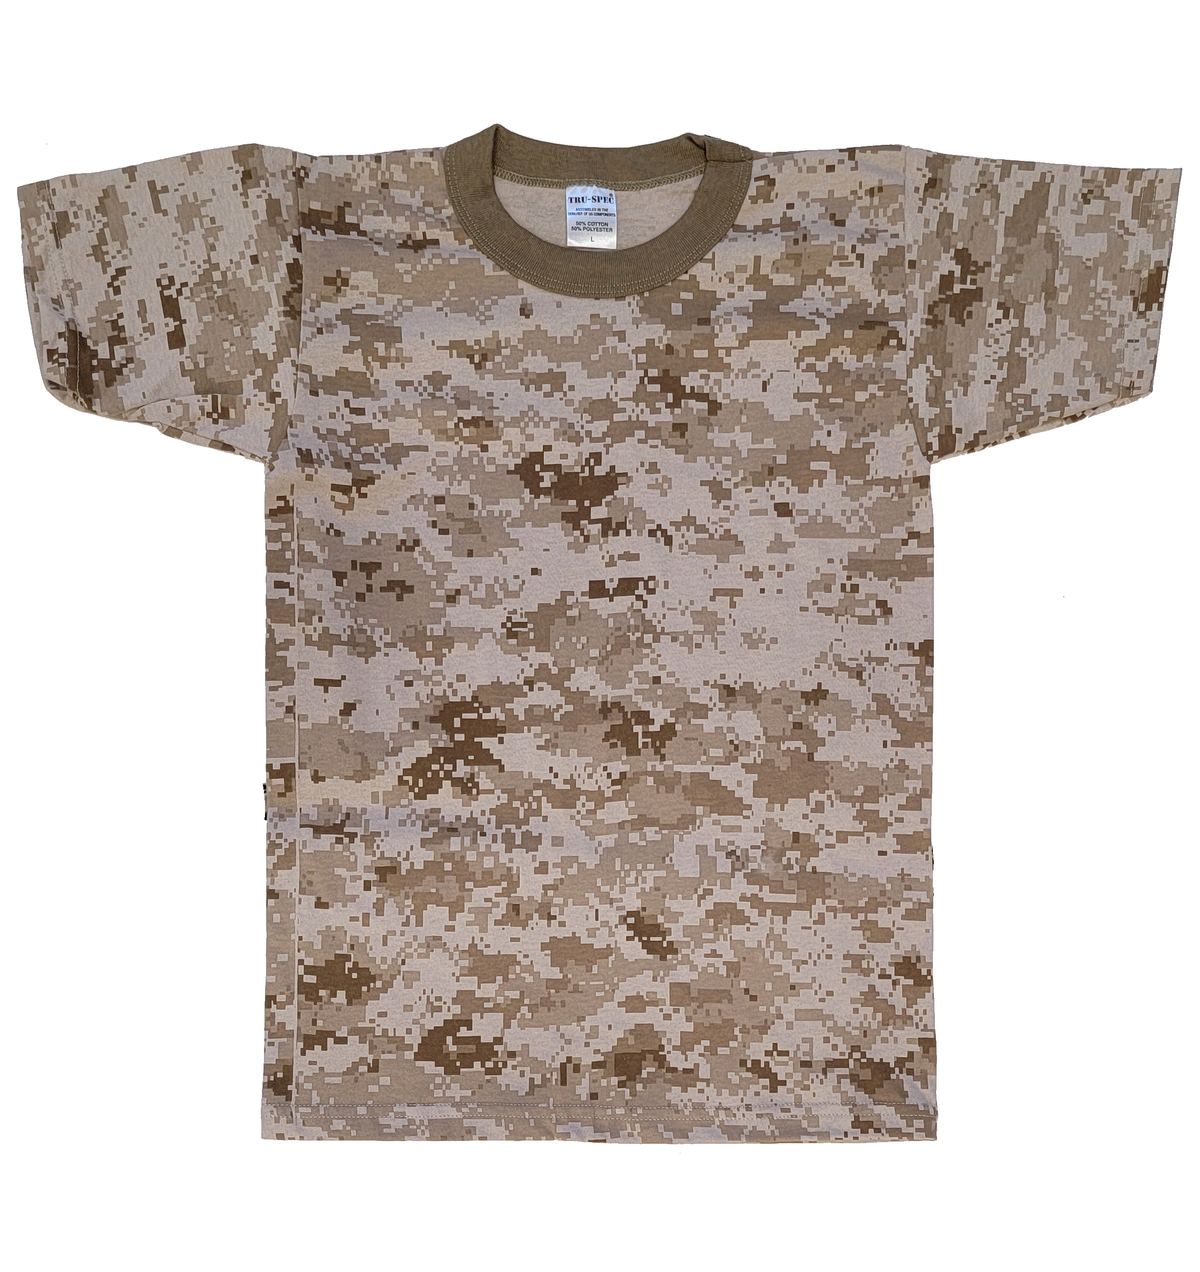 CLEARANCE - Kids Desert Digital Camouflage T-Shirt Size LARGE (14-16)